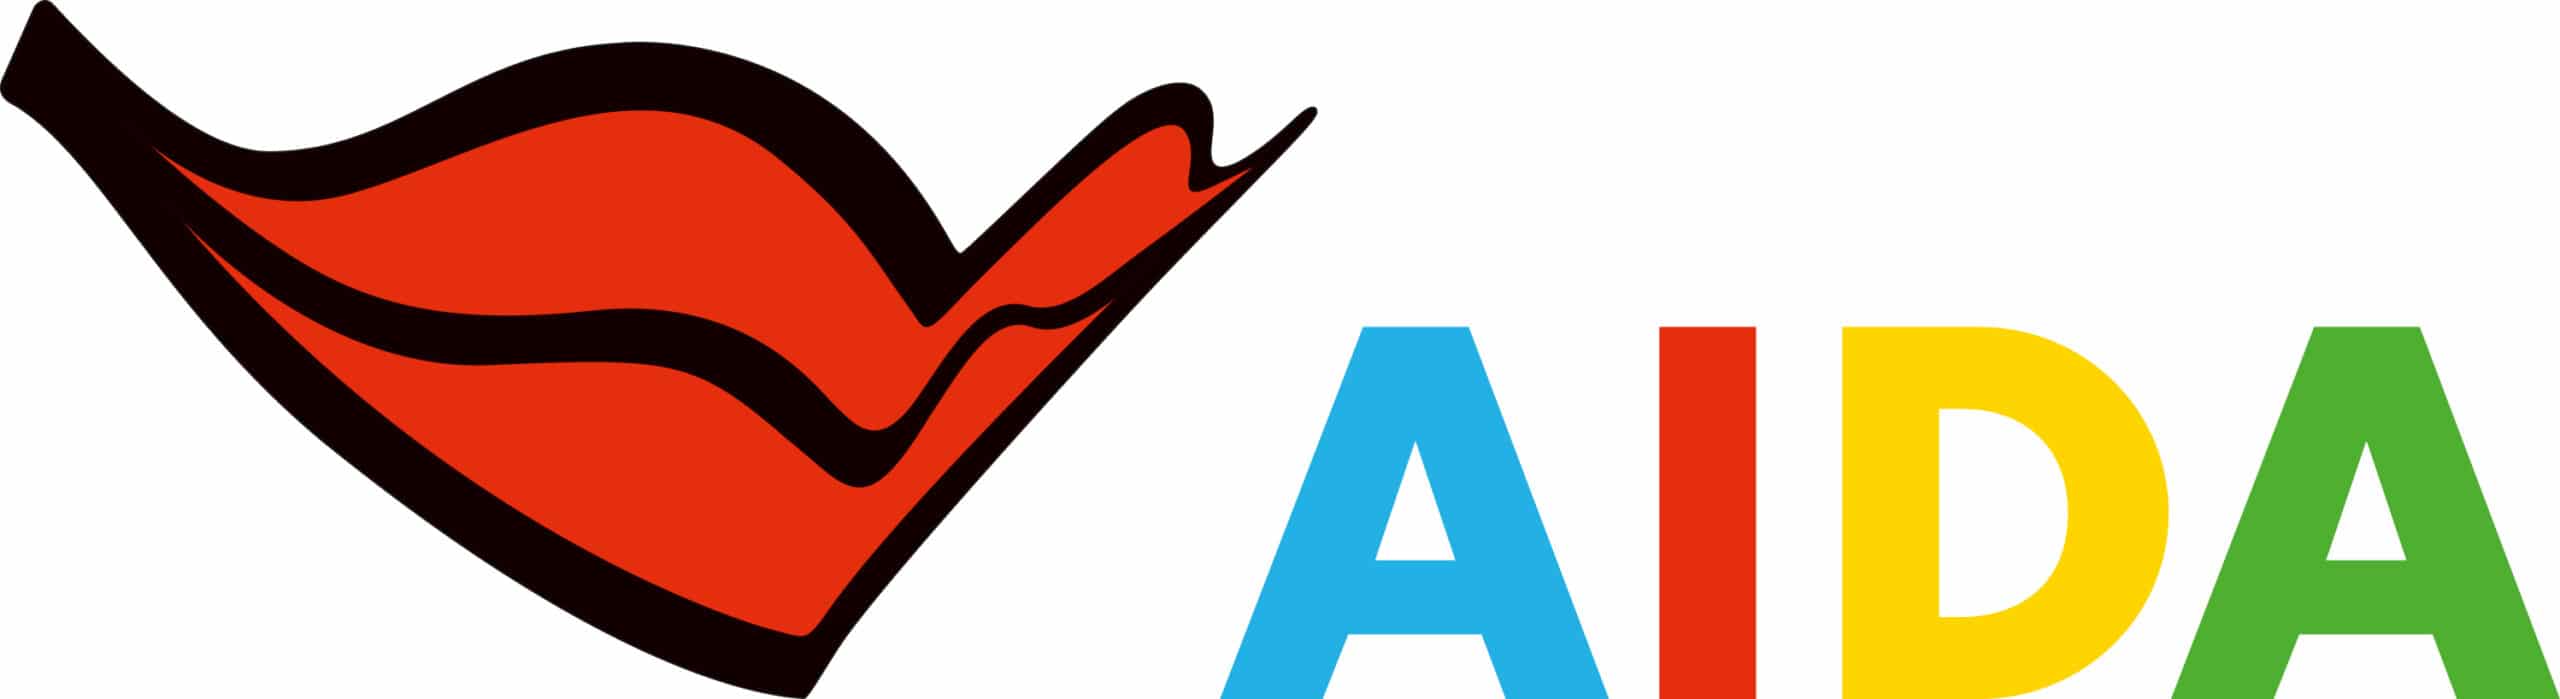 Logo AIDA cruises